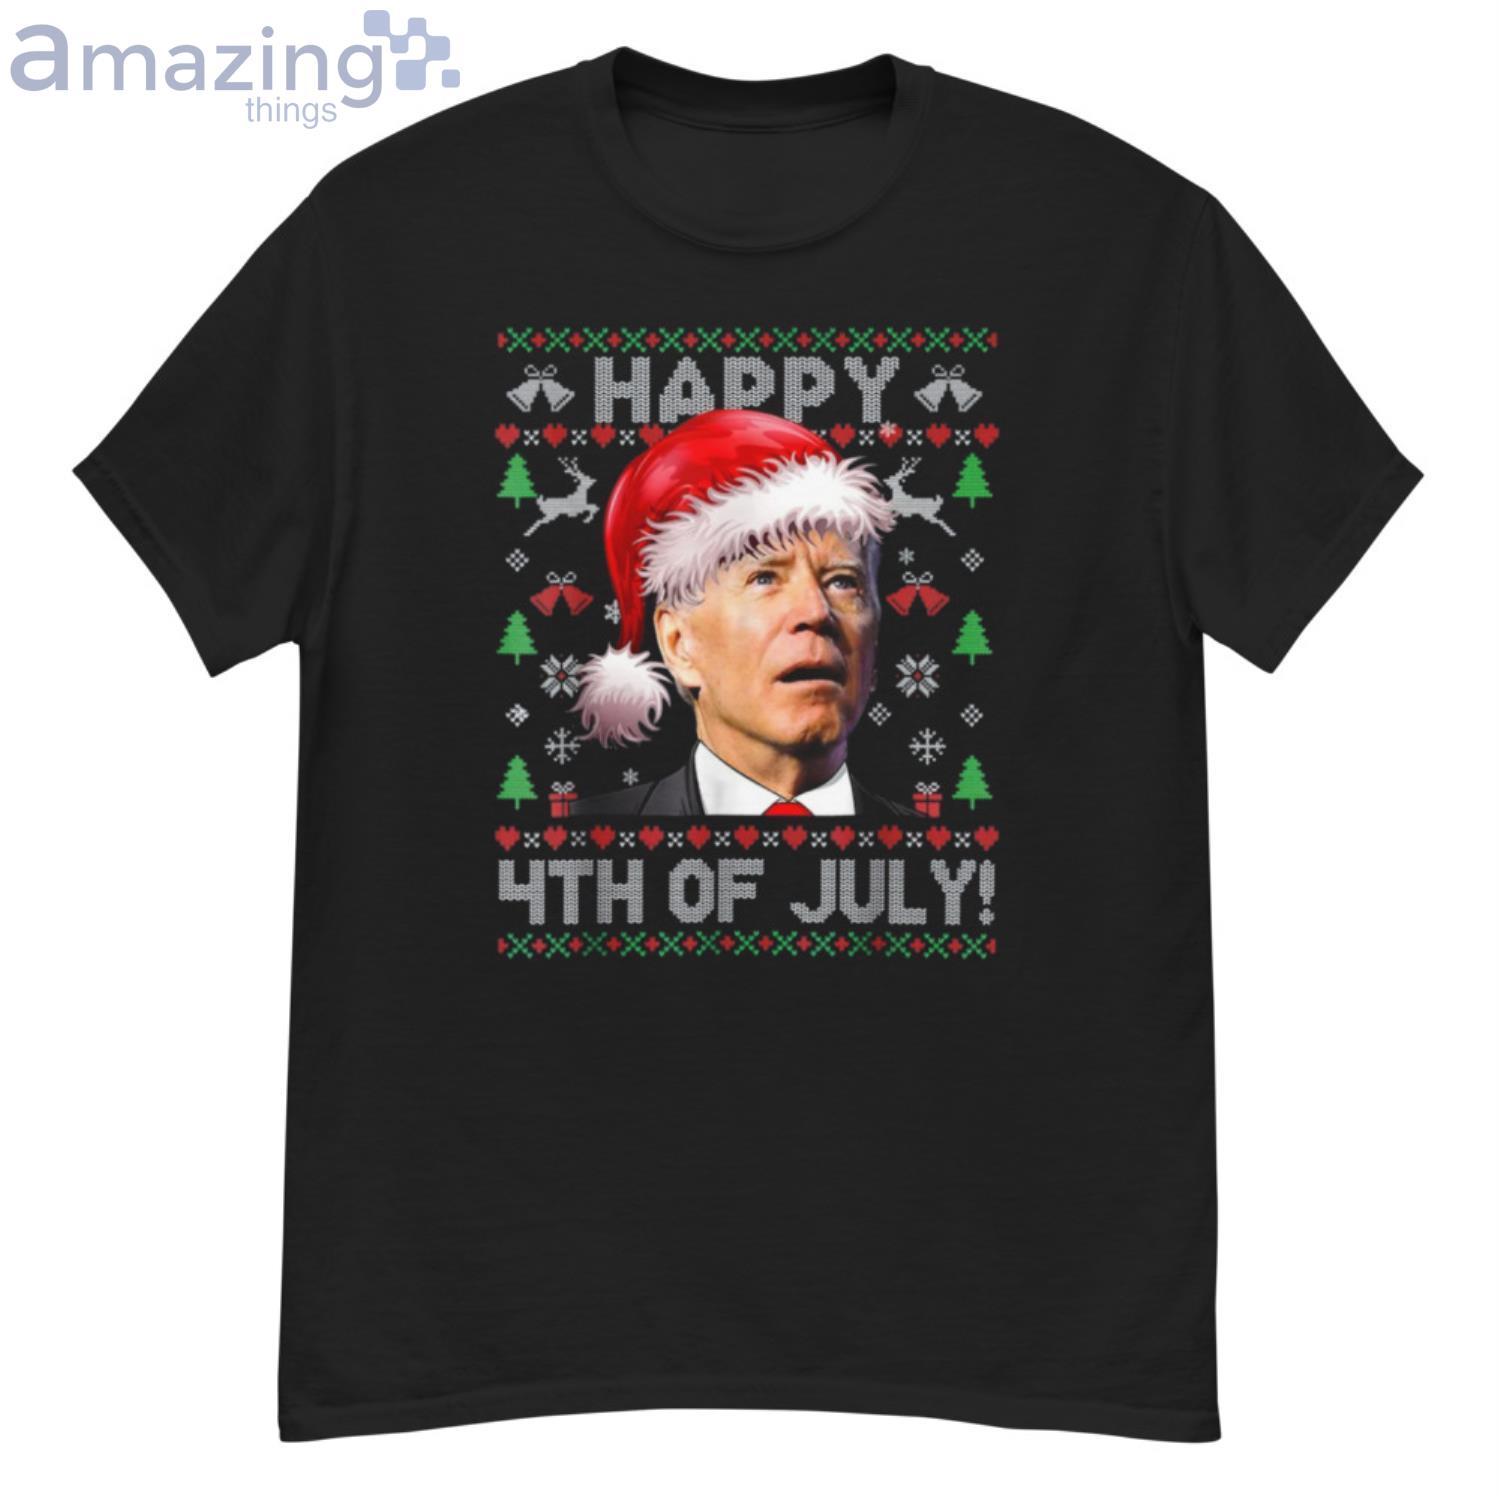 Santa Joe Biden Happy 4th of July Christmas Shirt Product Photo 1